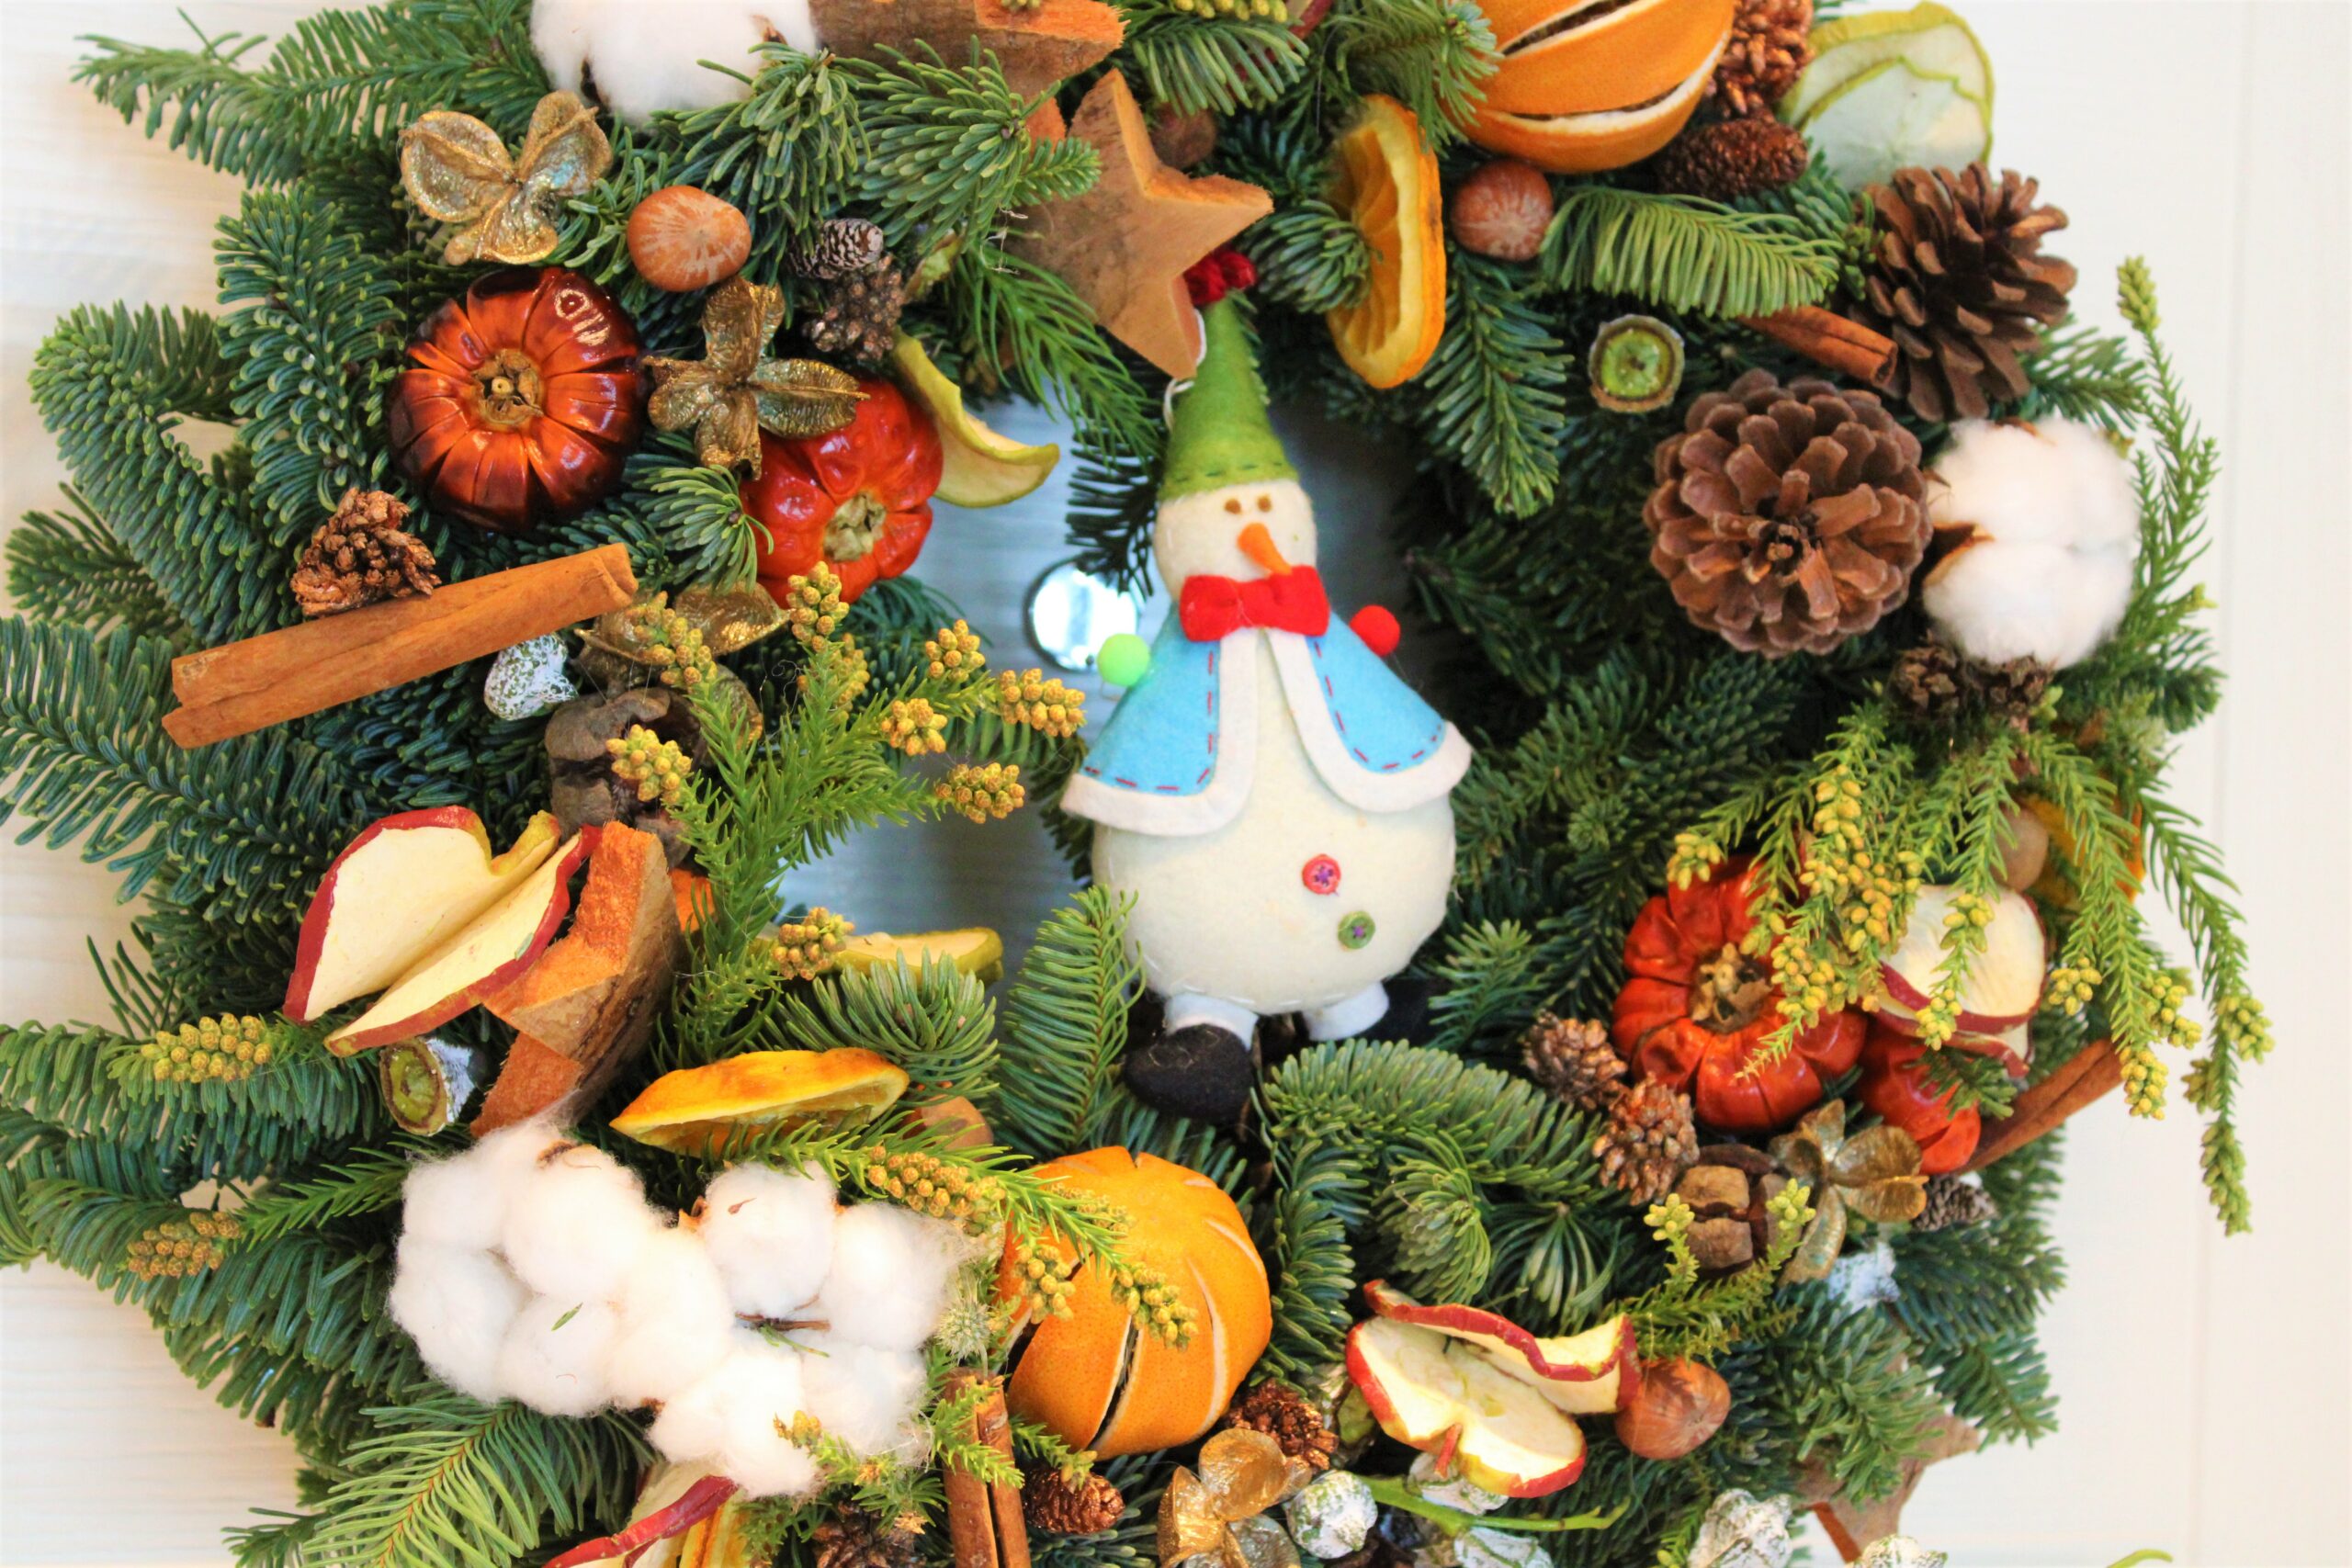 December Workshop – Christmas Wreath